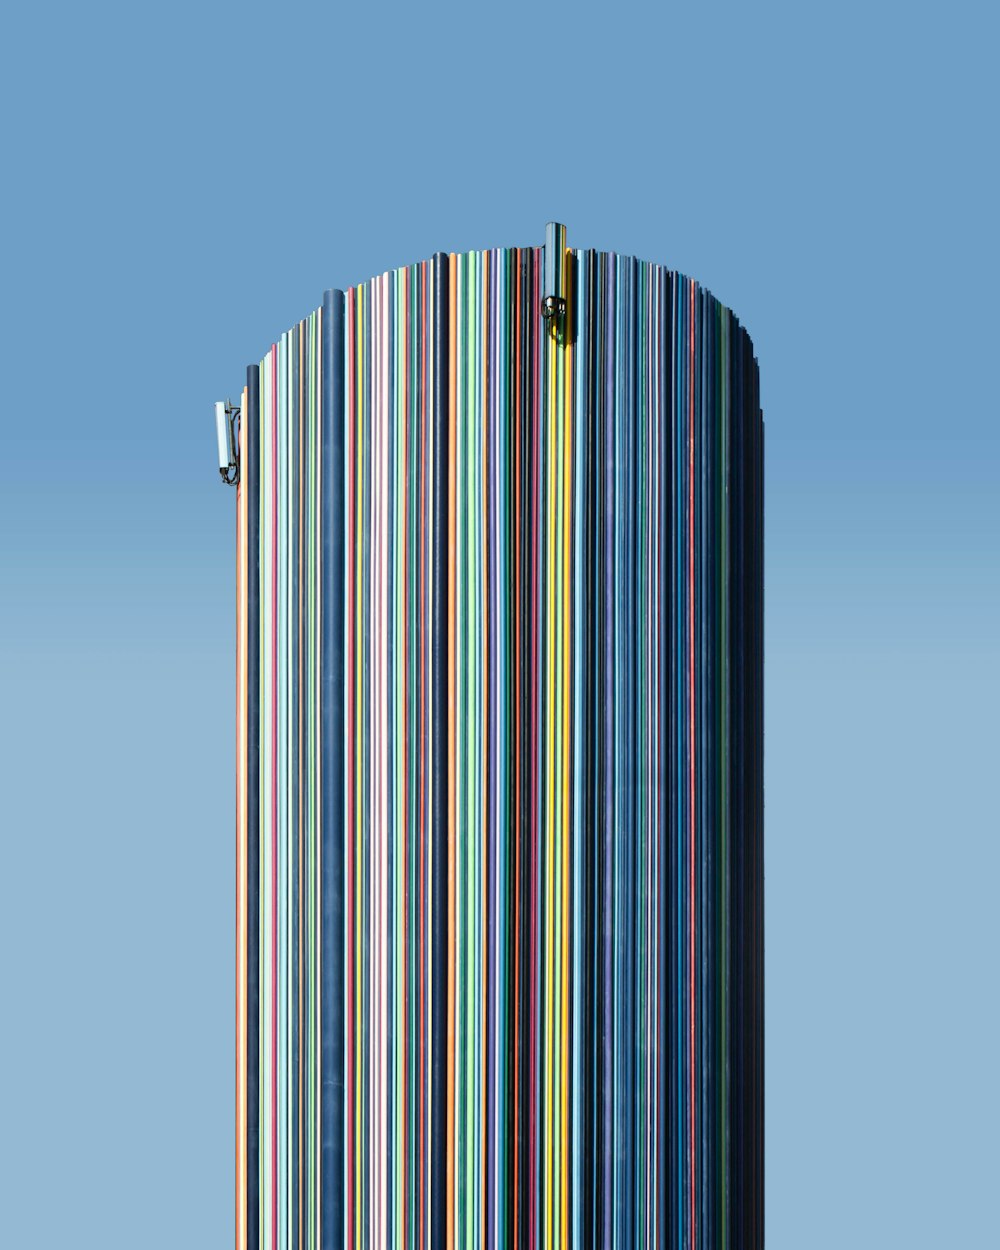 Un alto edificio multicolore con uno sfondo del cielo